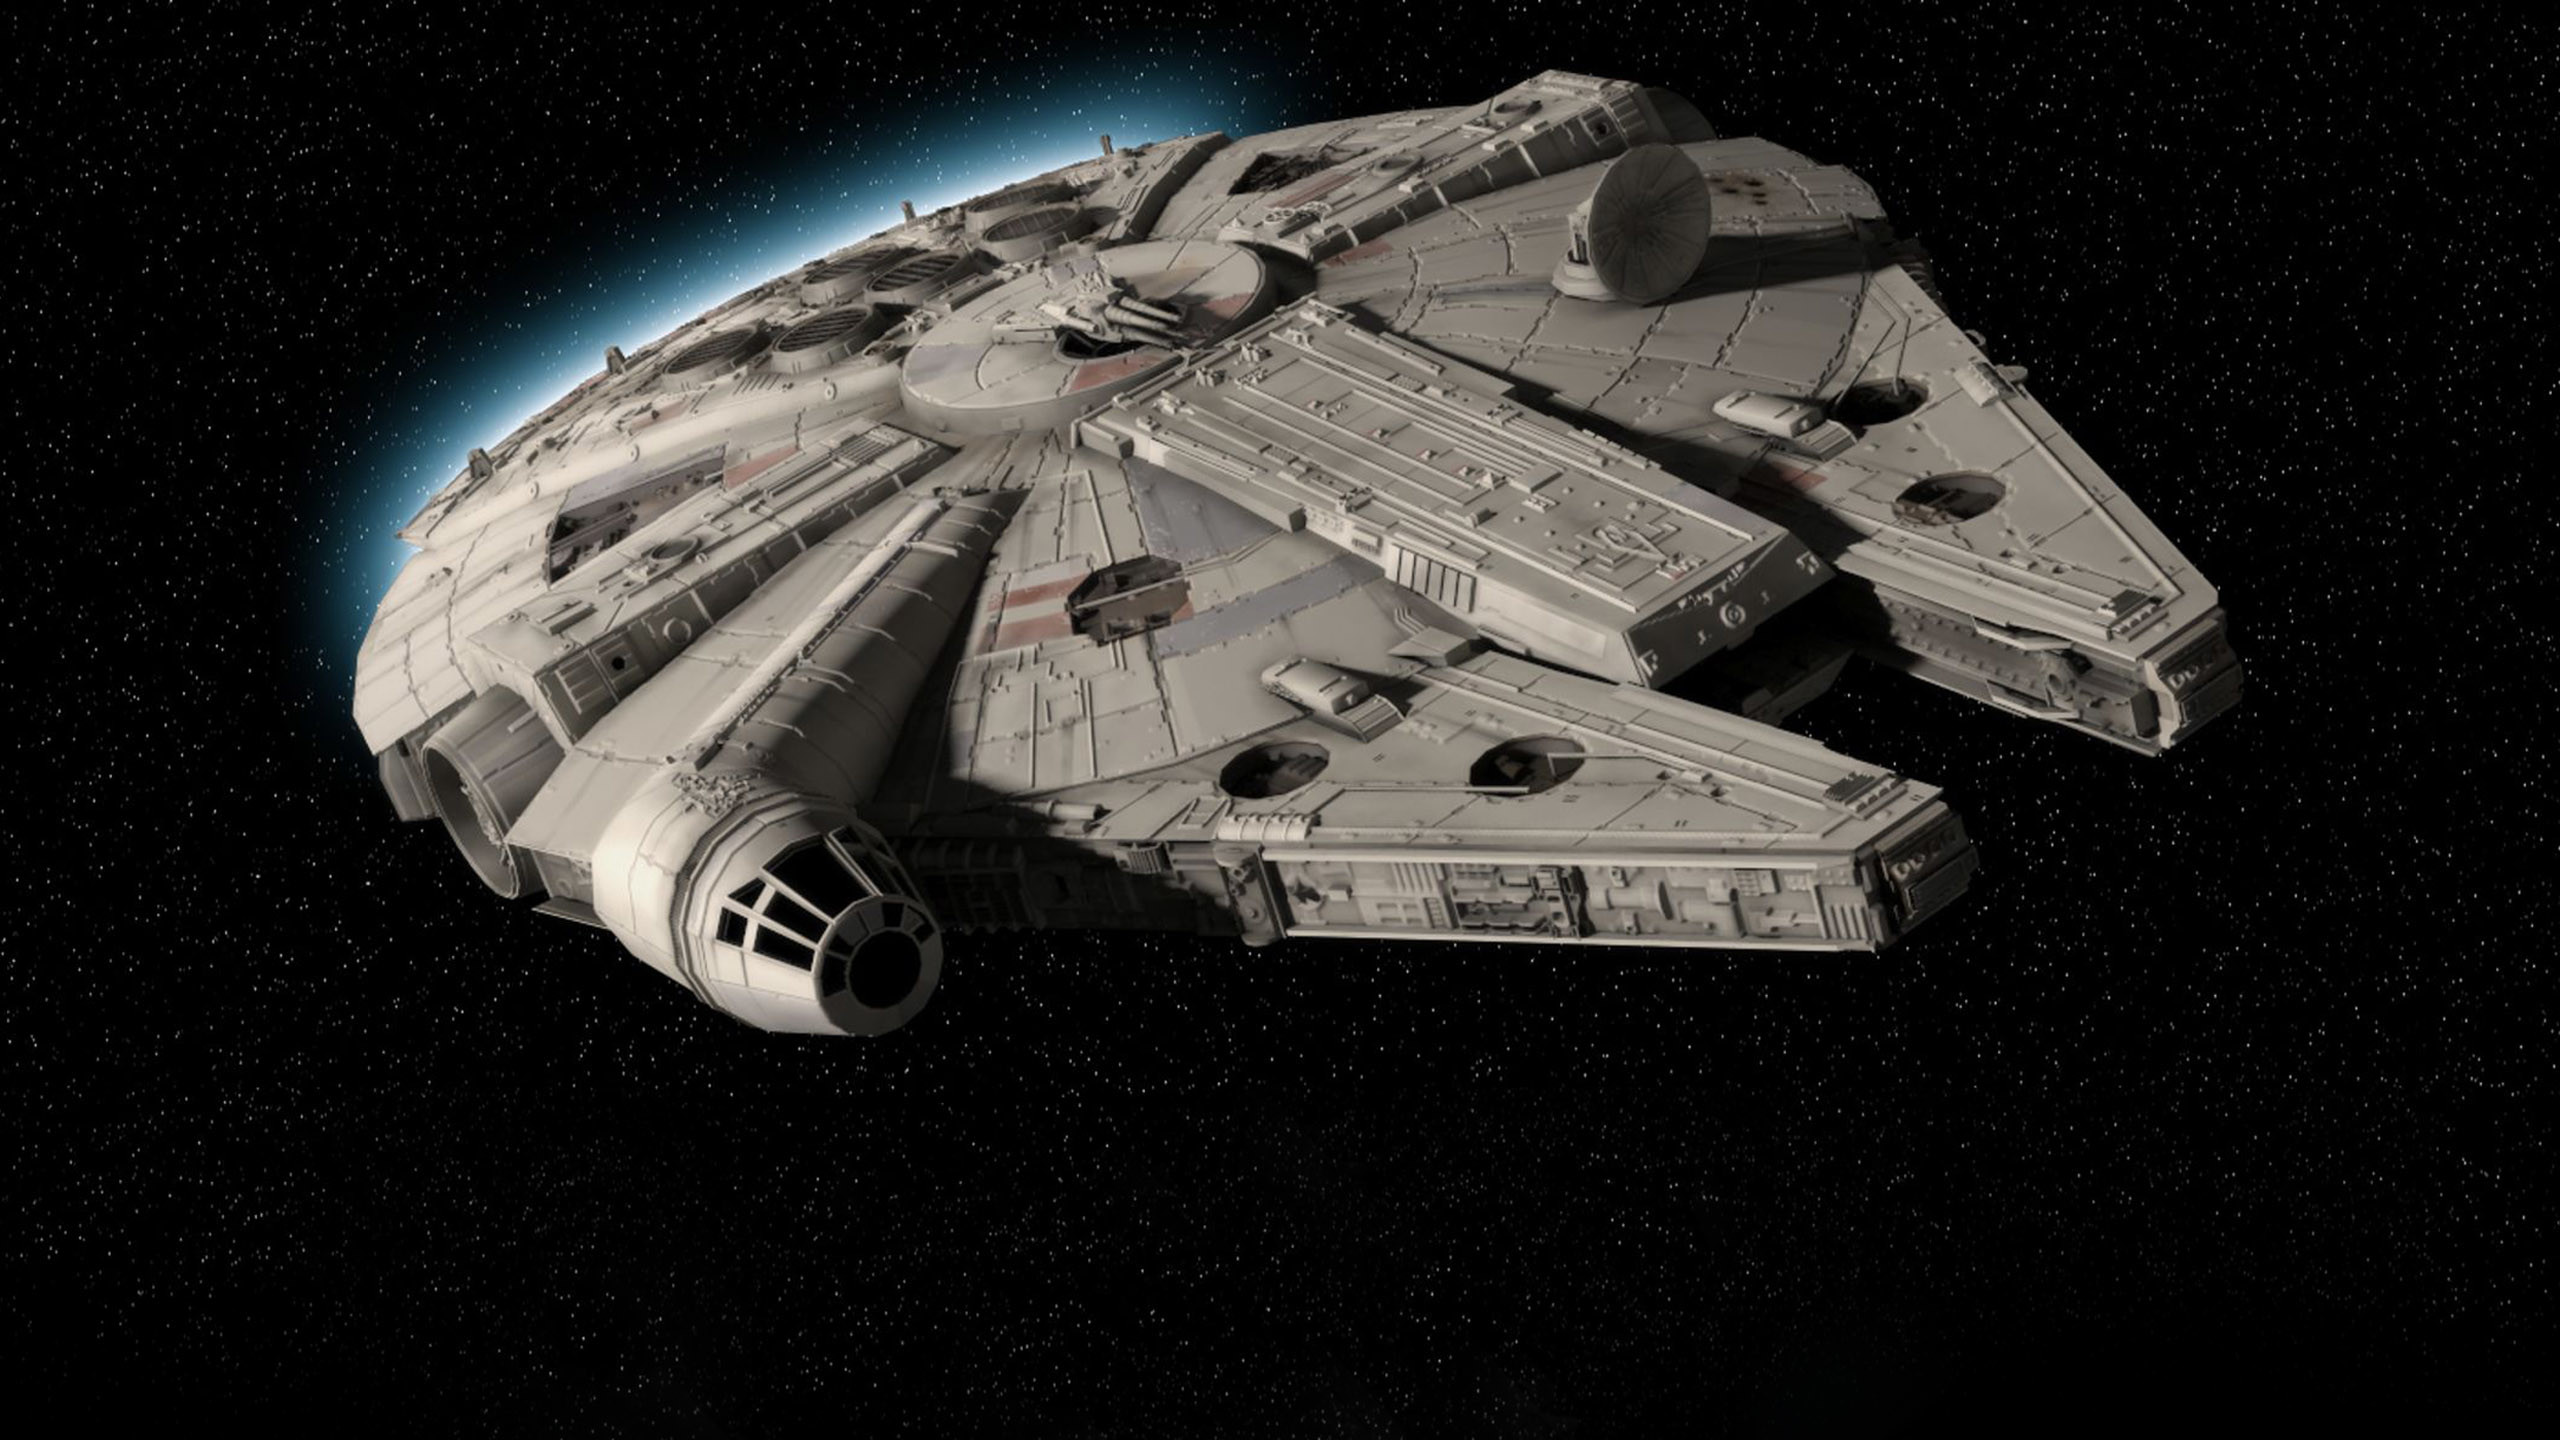 2560x1440 Star Wars Movies Spaceships Millenium Falcon Desktop Hd Wallpaper :  Wallpapers13.com